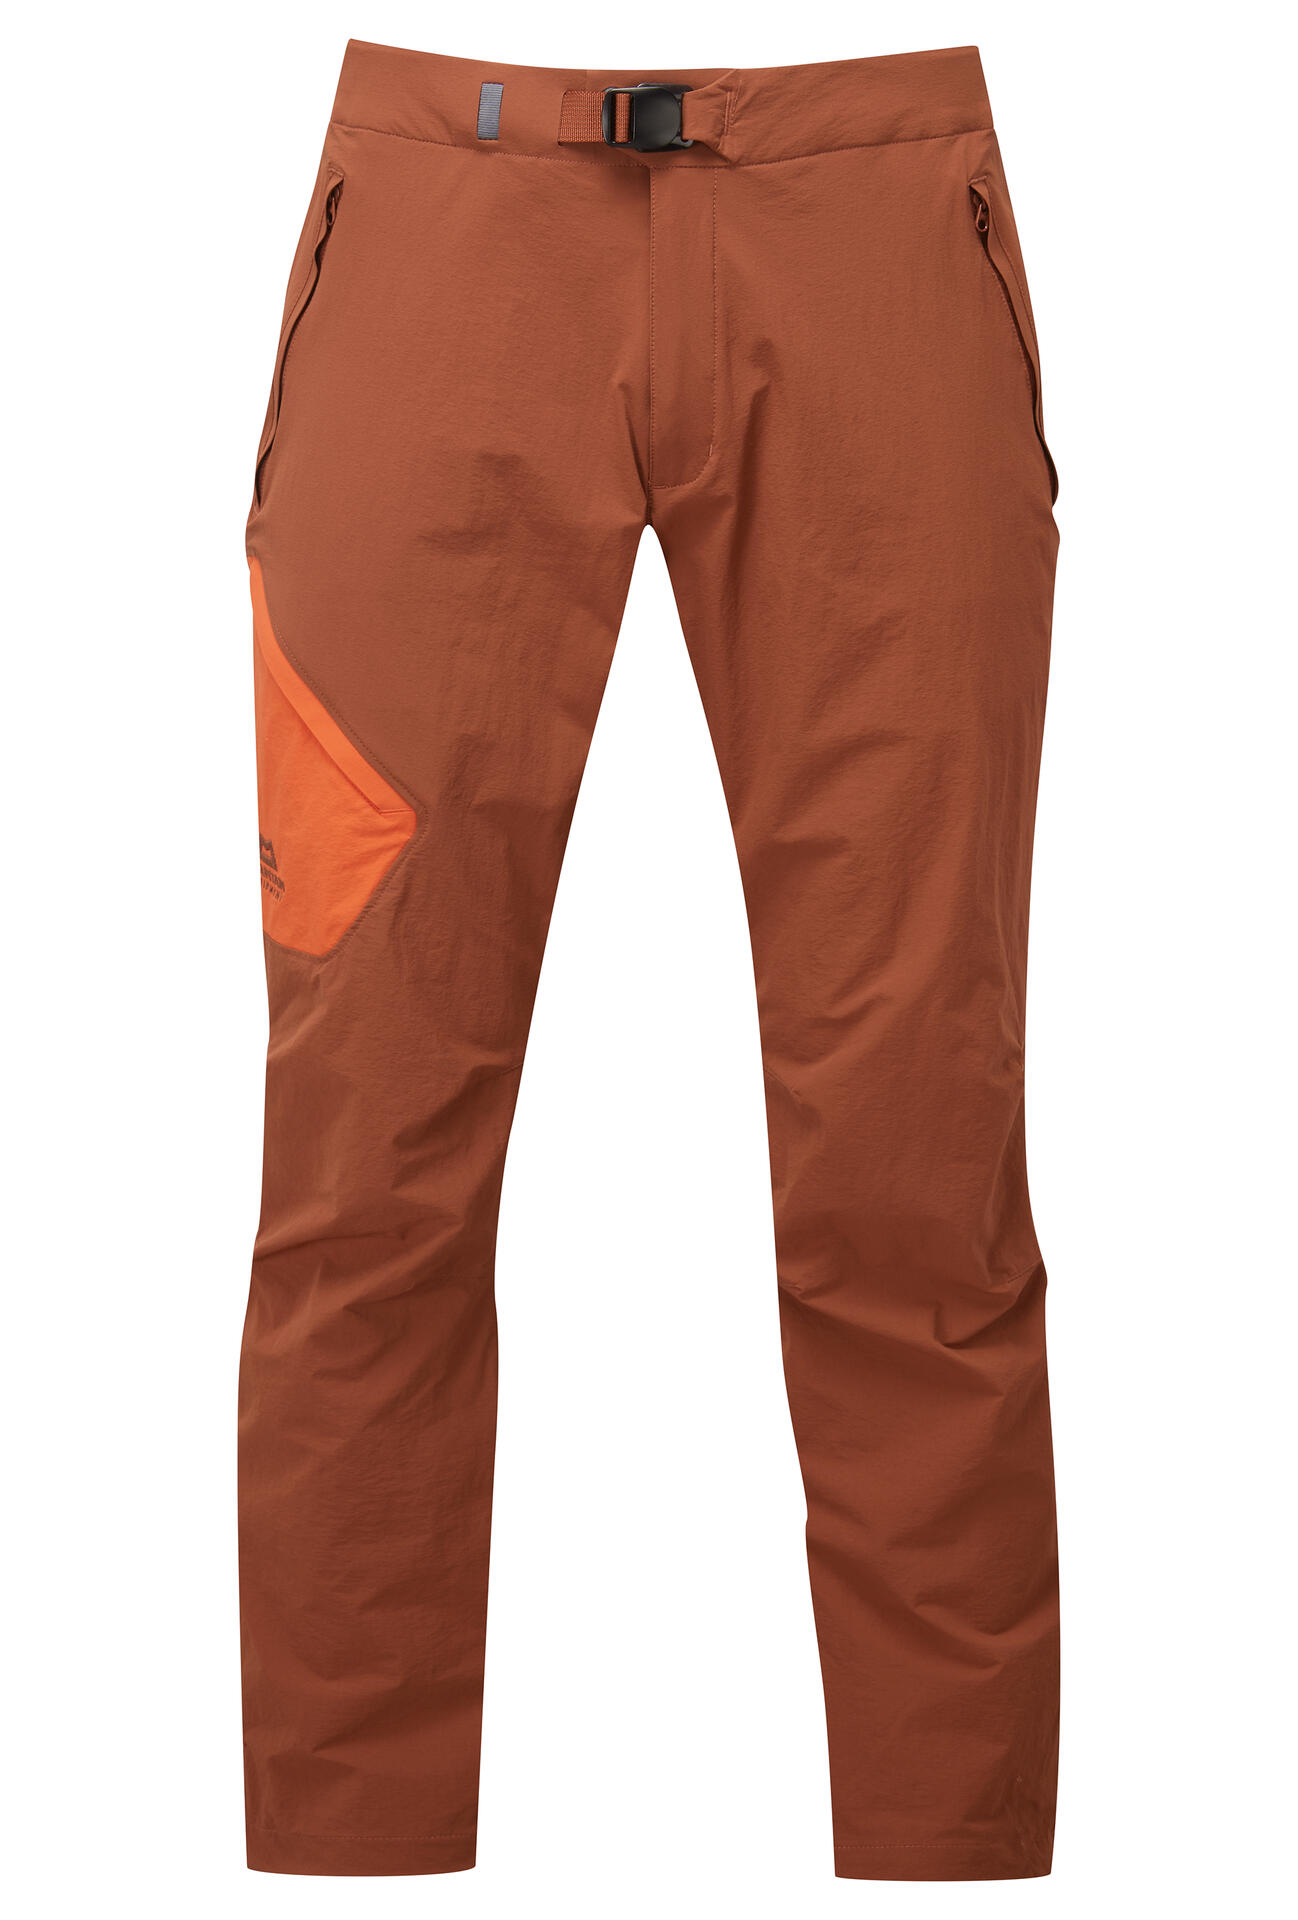 Mountain Equipment Comici Pant (Ac) Men'S - zkrácené nohavice Barva: Burnt Henna/Cardinal Orange, Velikost: XXL